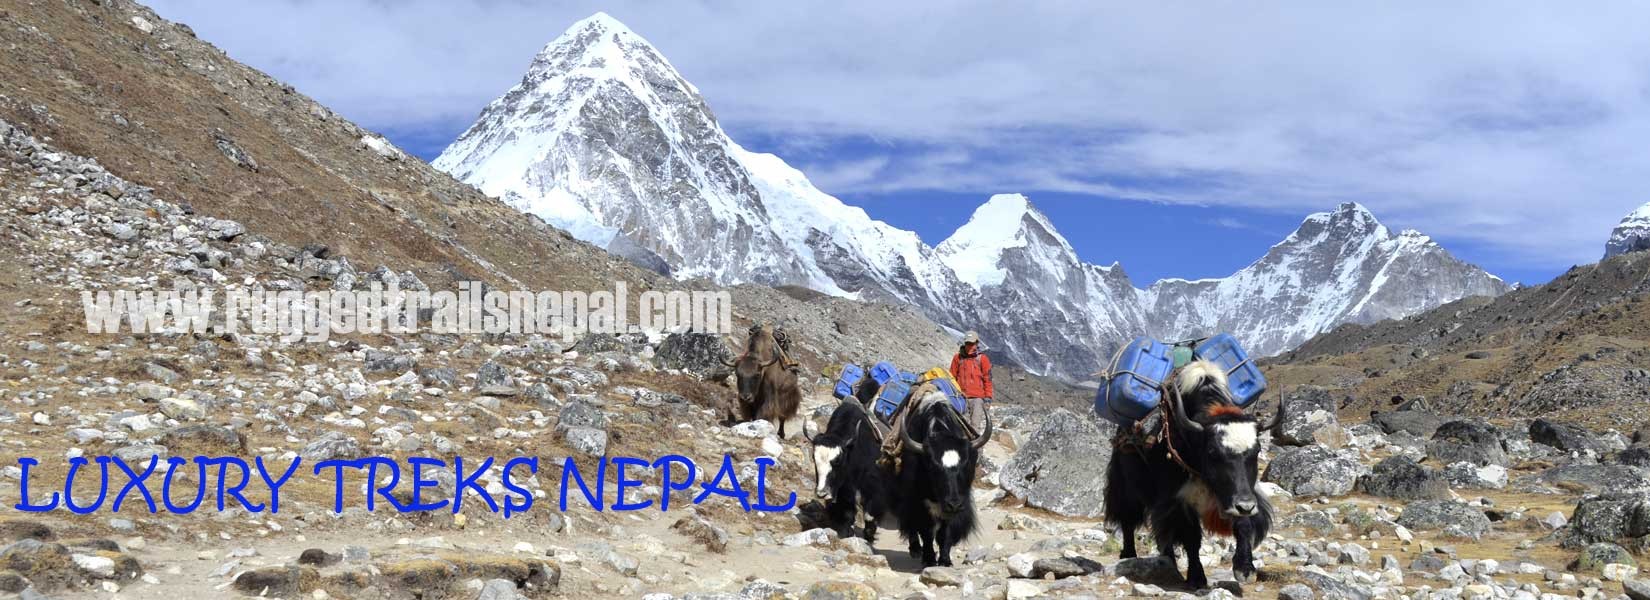 luxury trekking routes in nepal everest annapurna